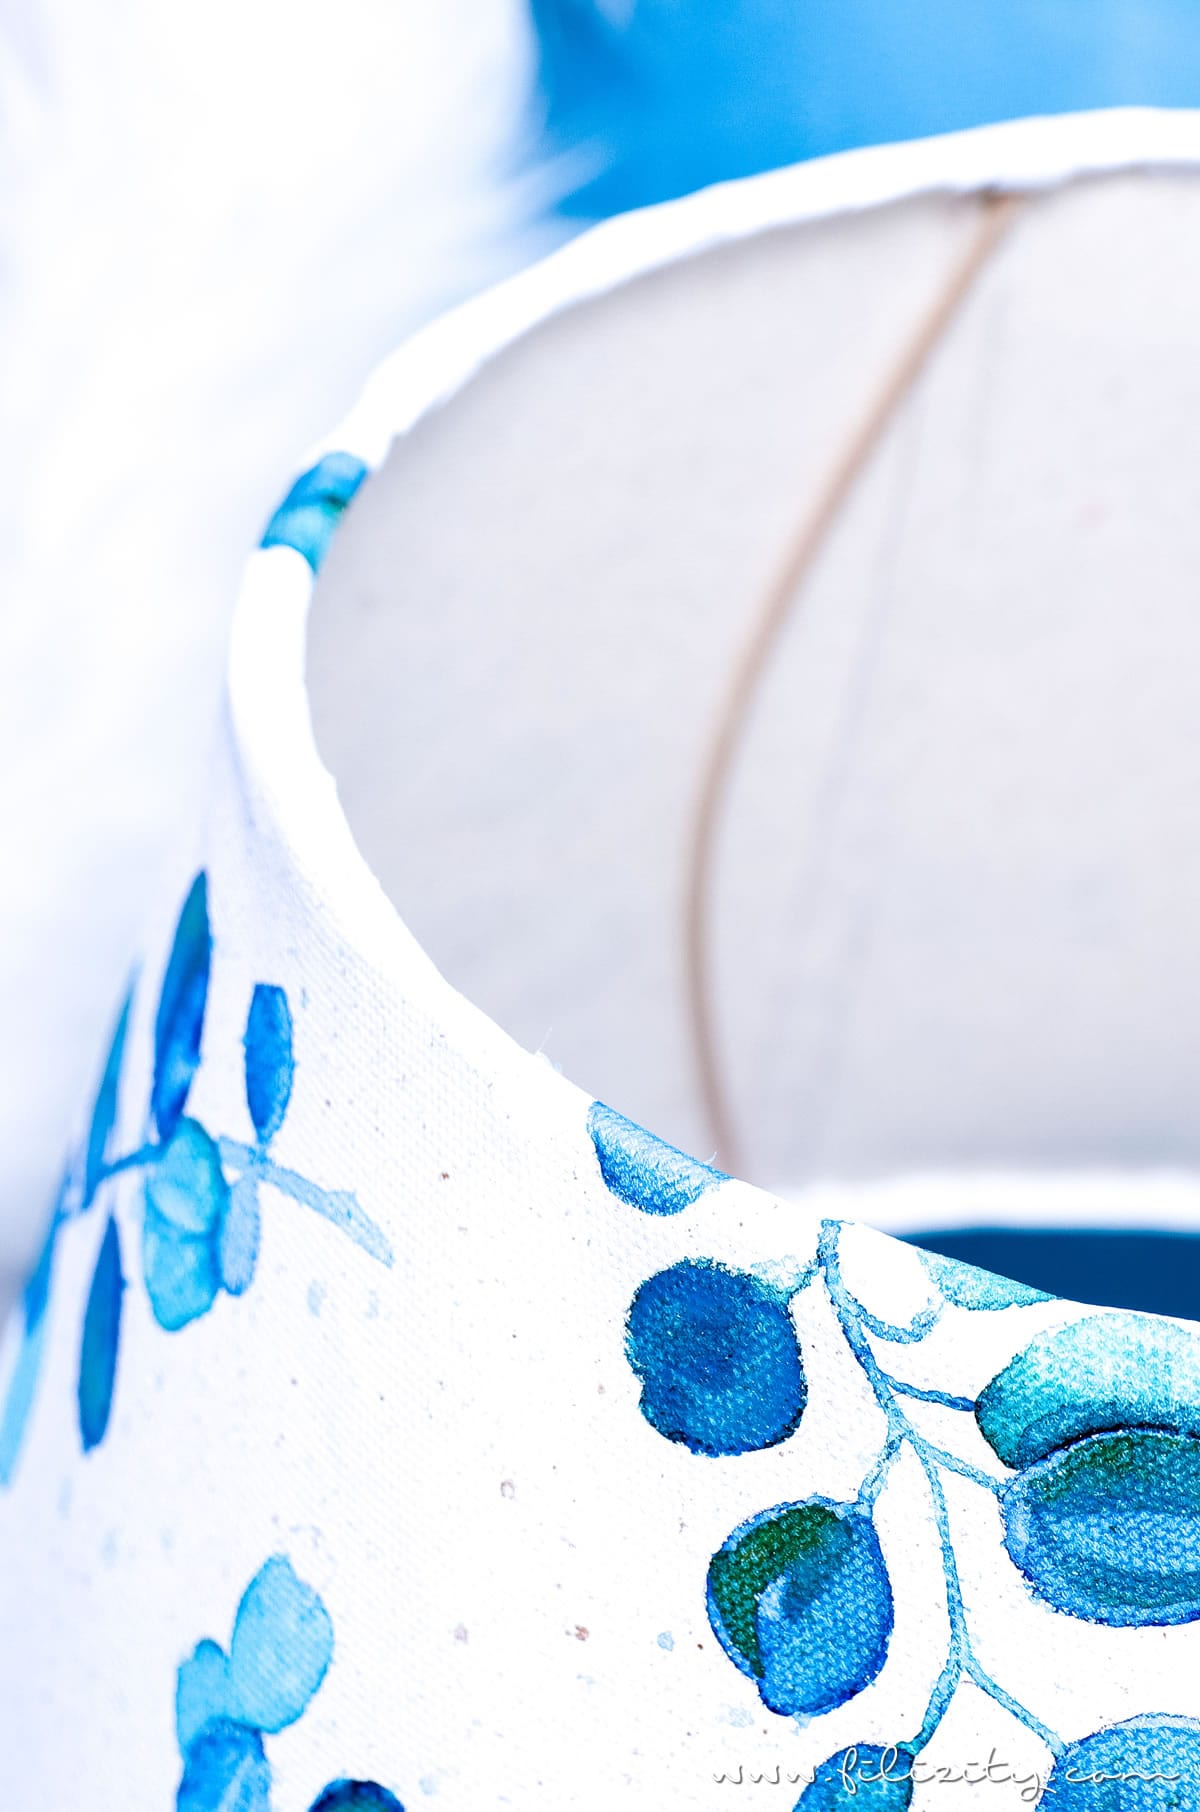 DIY Lampenschirm basteln aus Leinwand mit Aquarell-Muster | Upcycling Deko: Lampenschirm wechseln | Filizity.com | DIY-Blog aus dem Rheinland #upcycling #aquarell